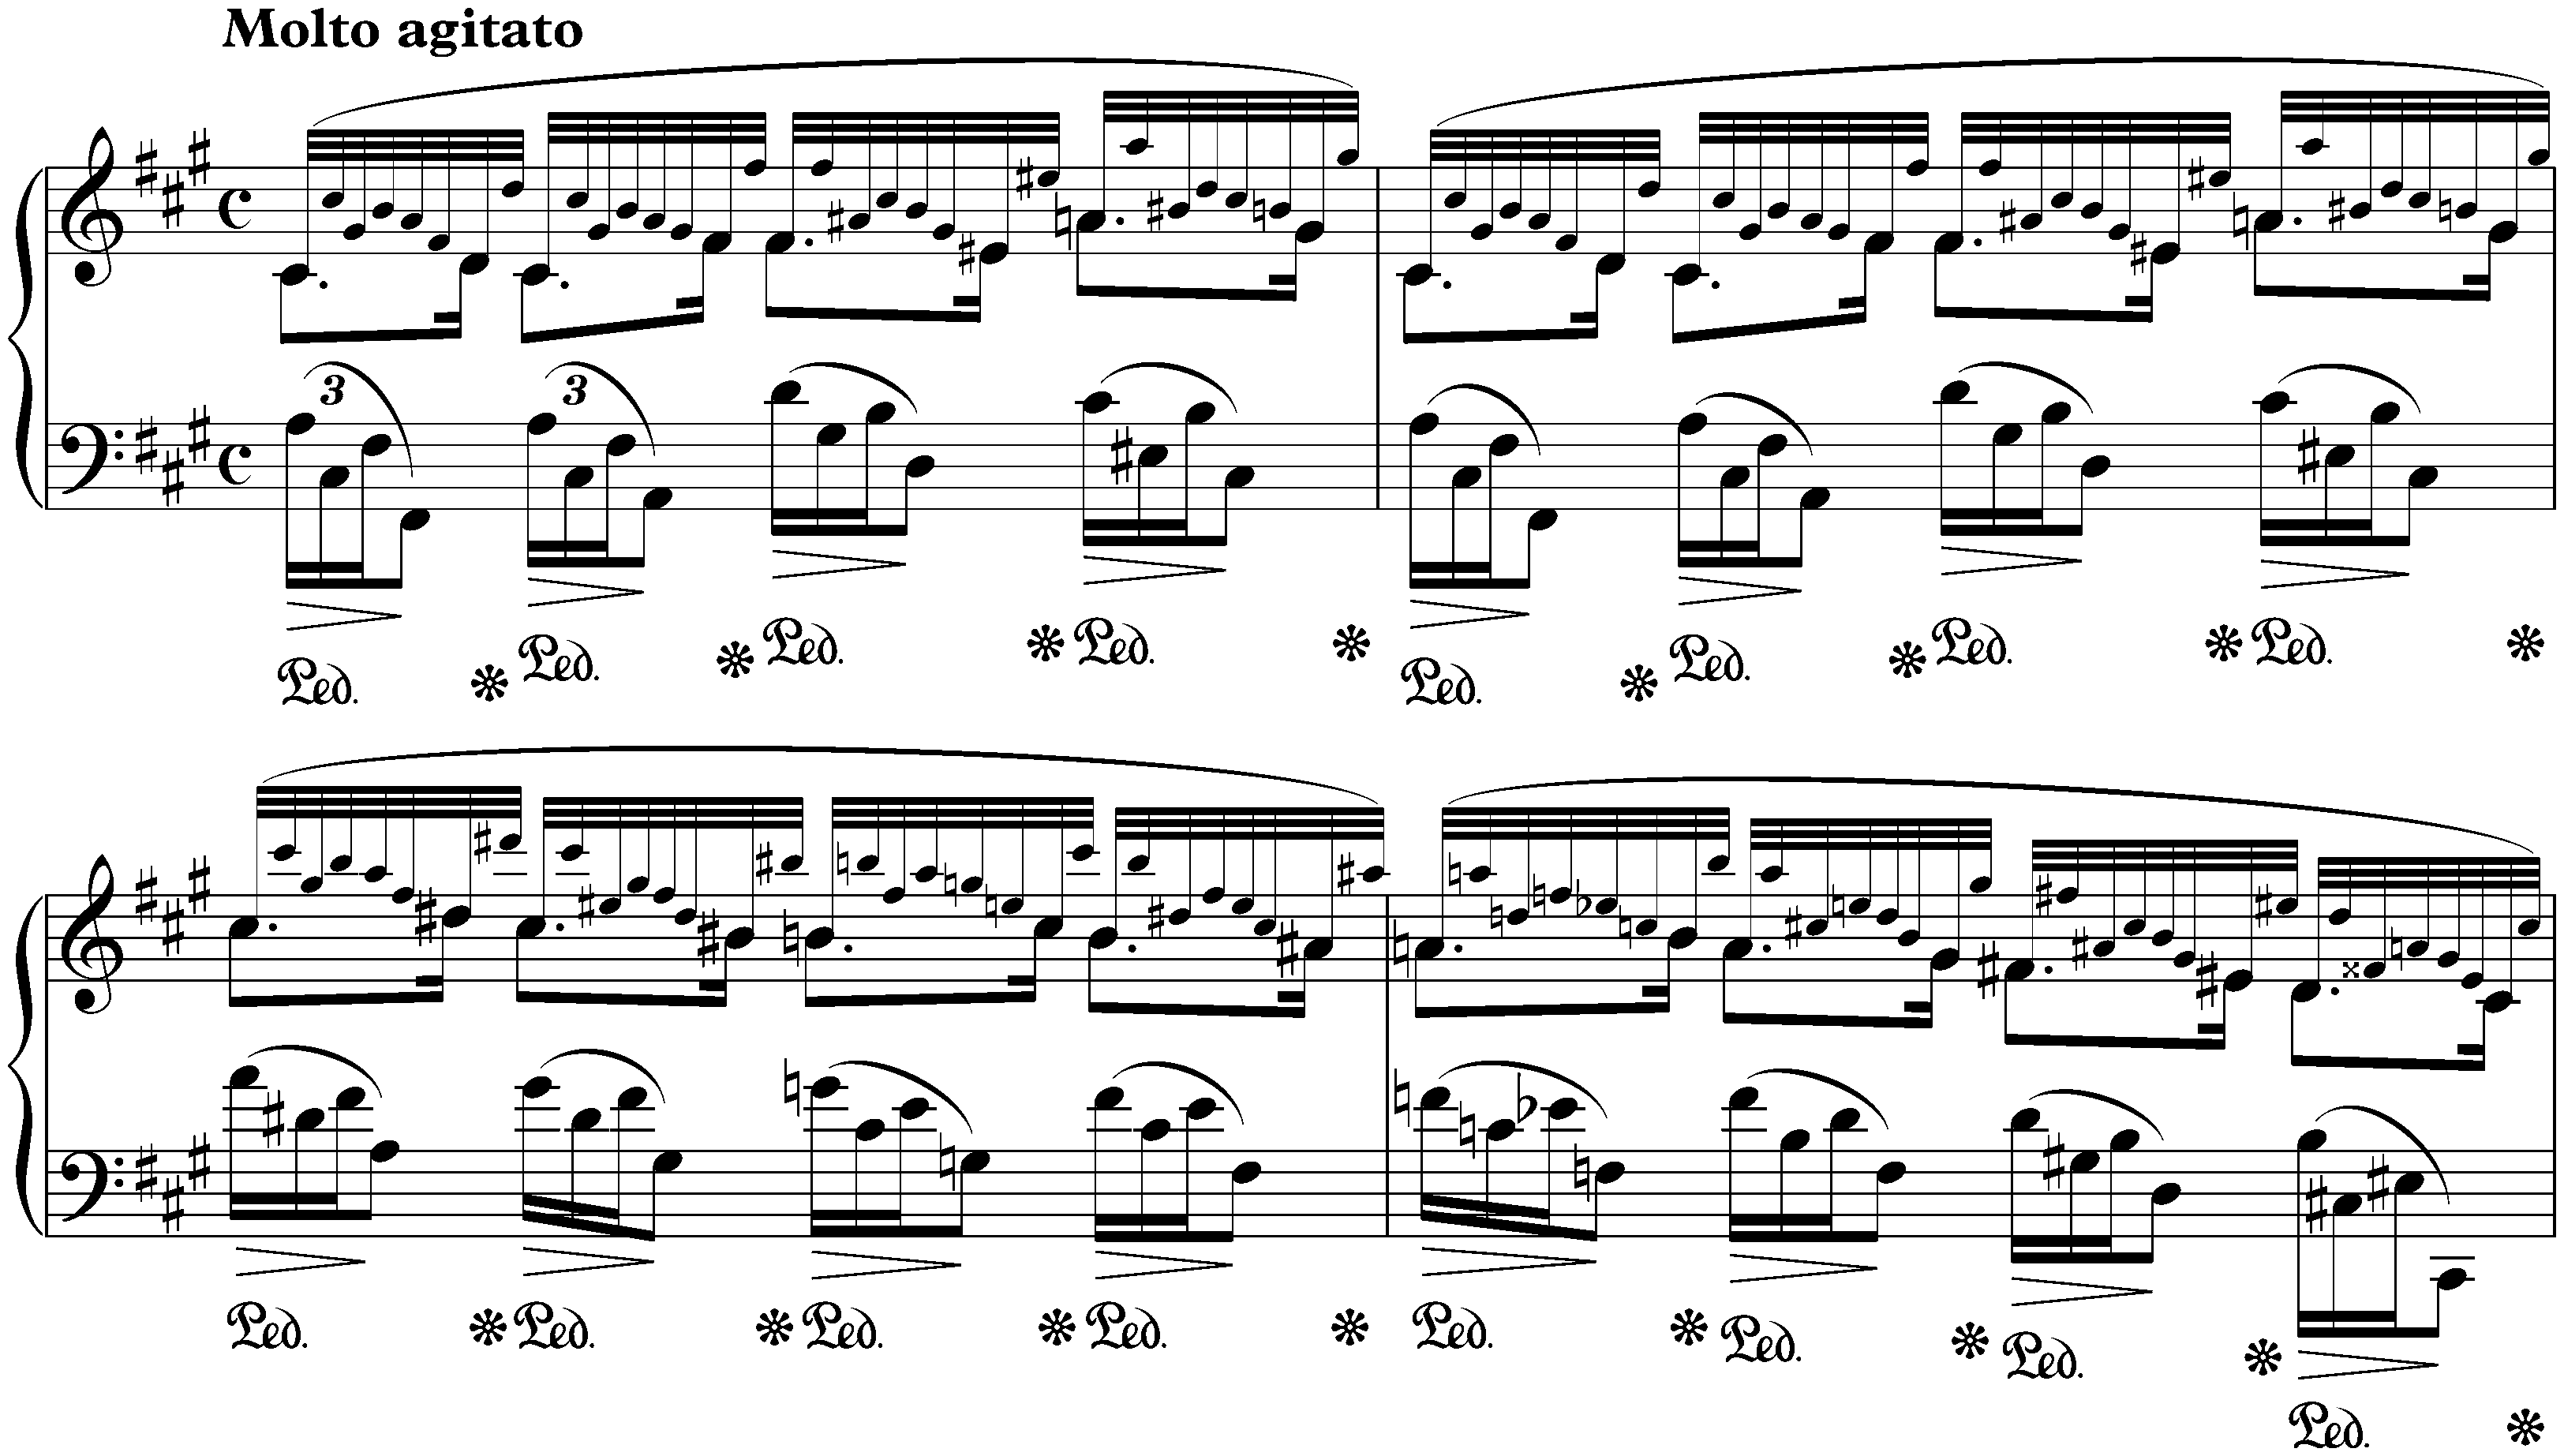 Twenty-four Préludes, op. 28; 8. F-sharp minor